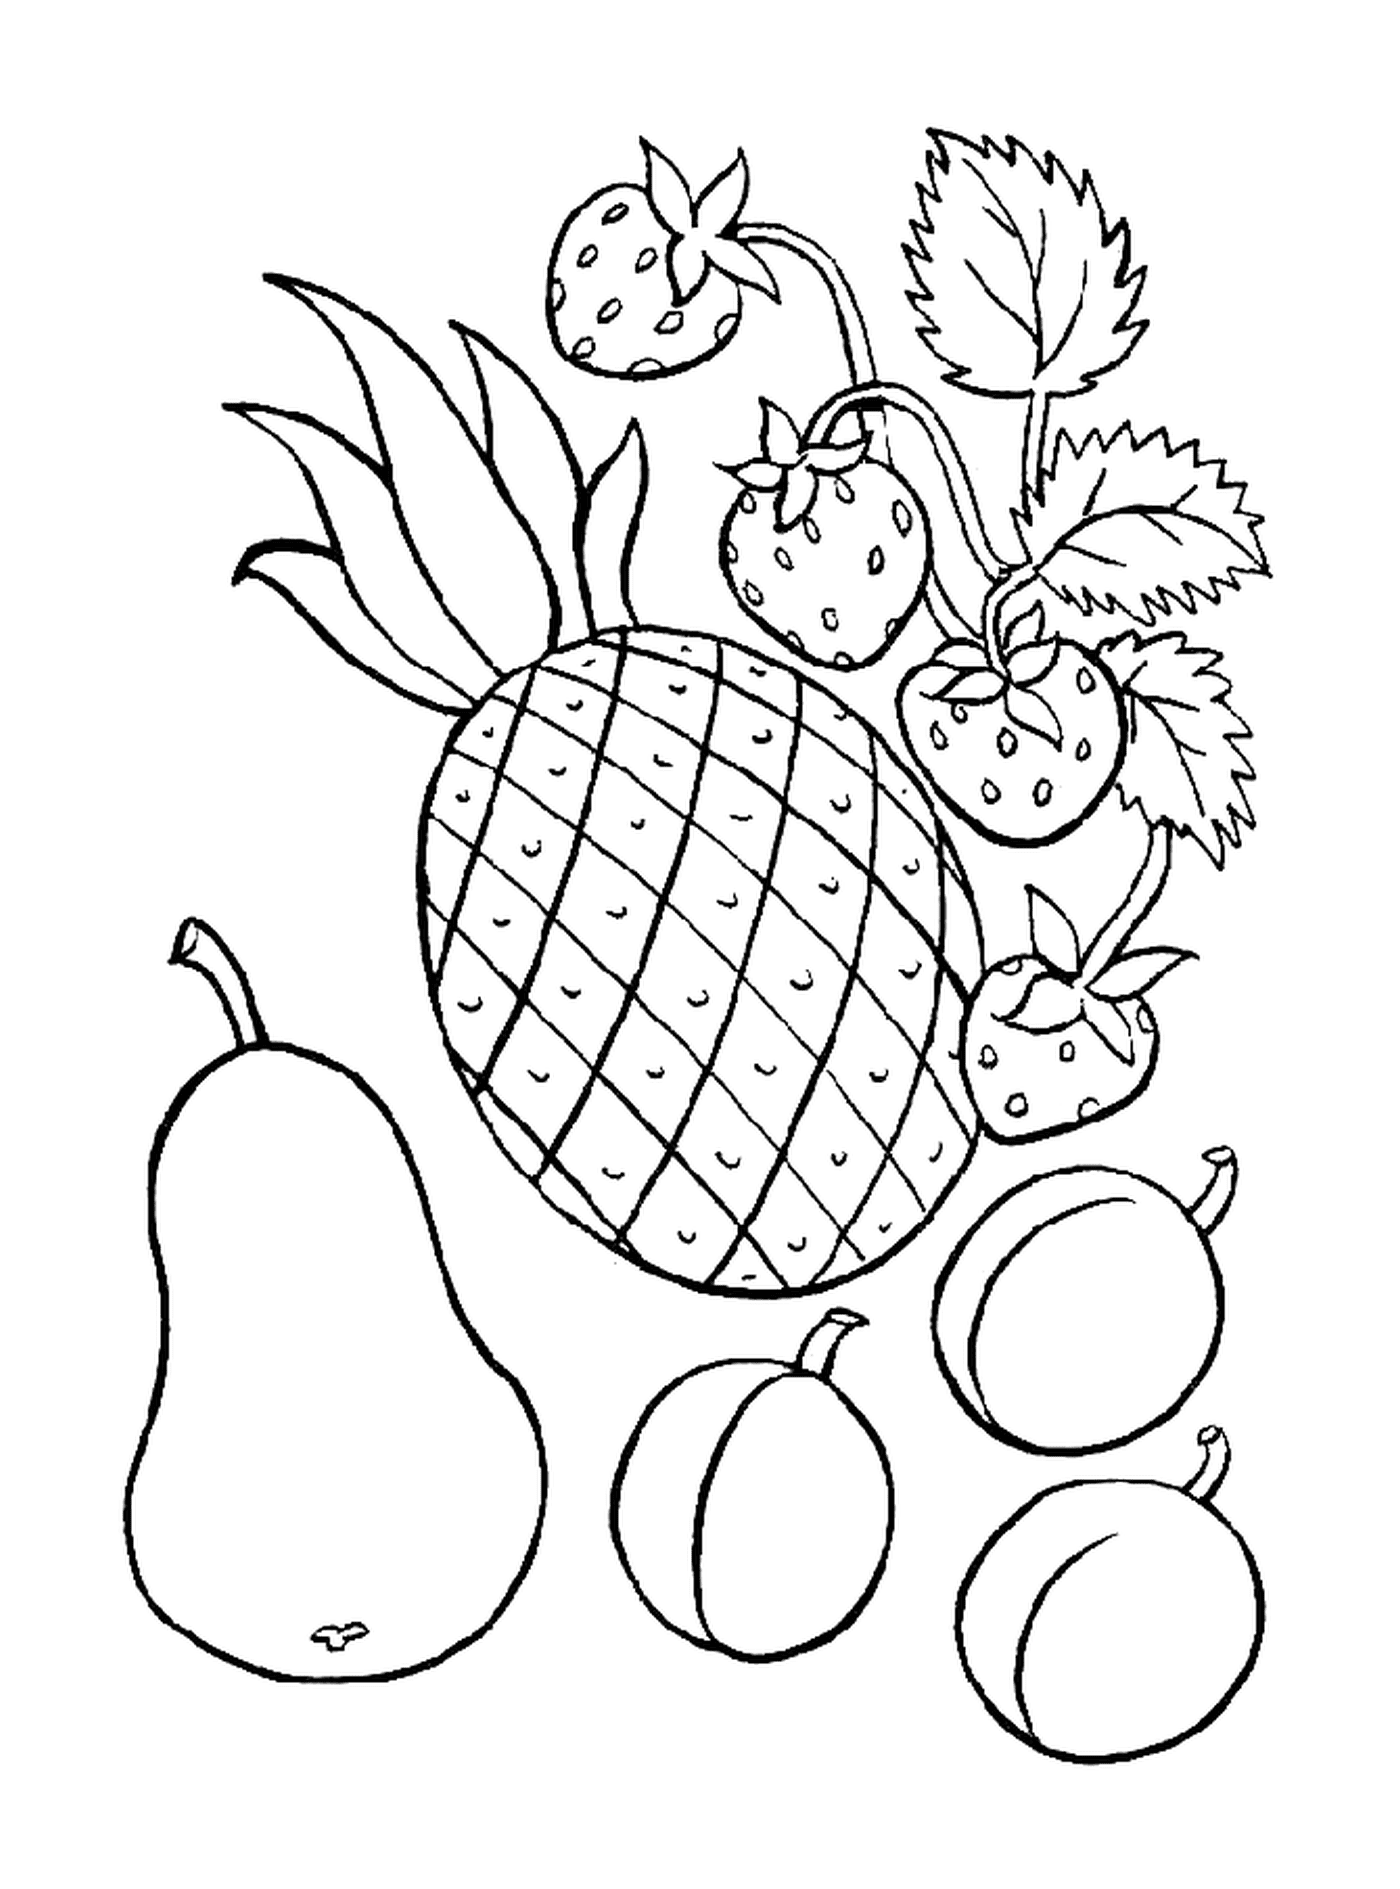   ananas et autres fruits 